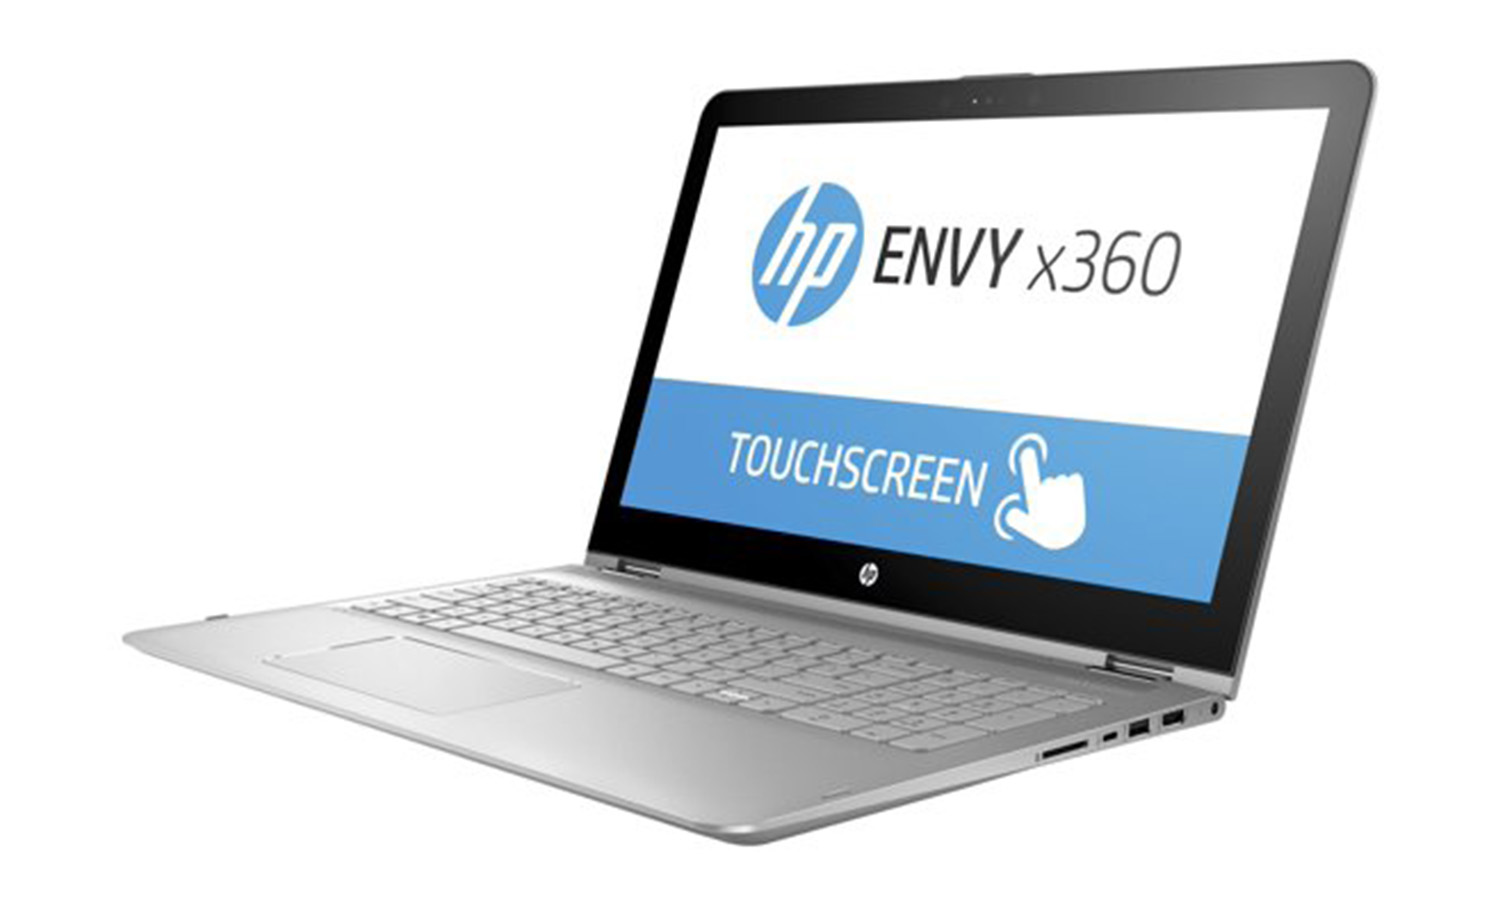 HP Envy X360 m6 Intel Core i7 7th Gen 16GB RAM 1TB HDD Touchscreen Windows 10 Home